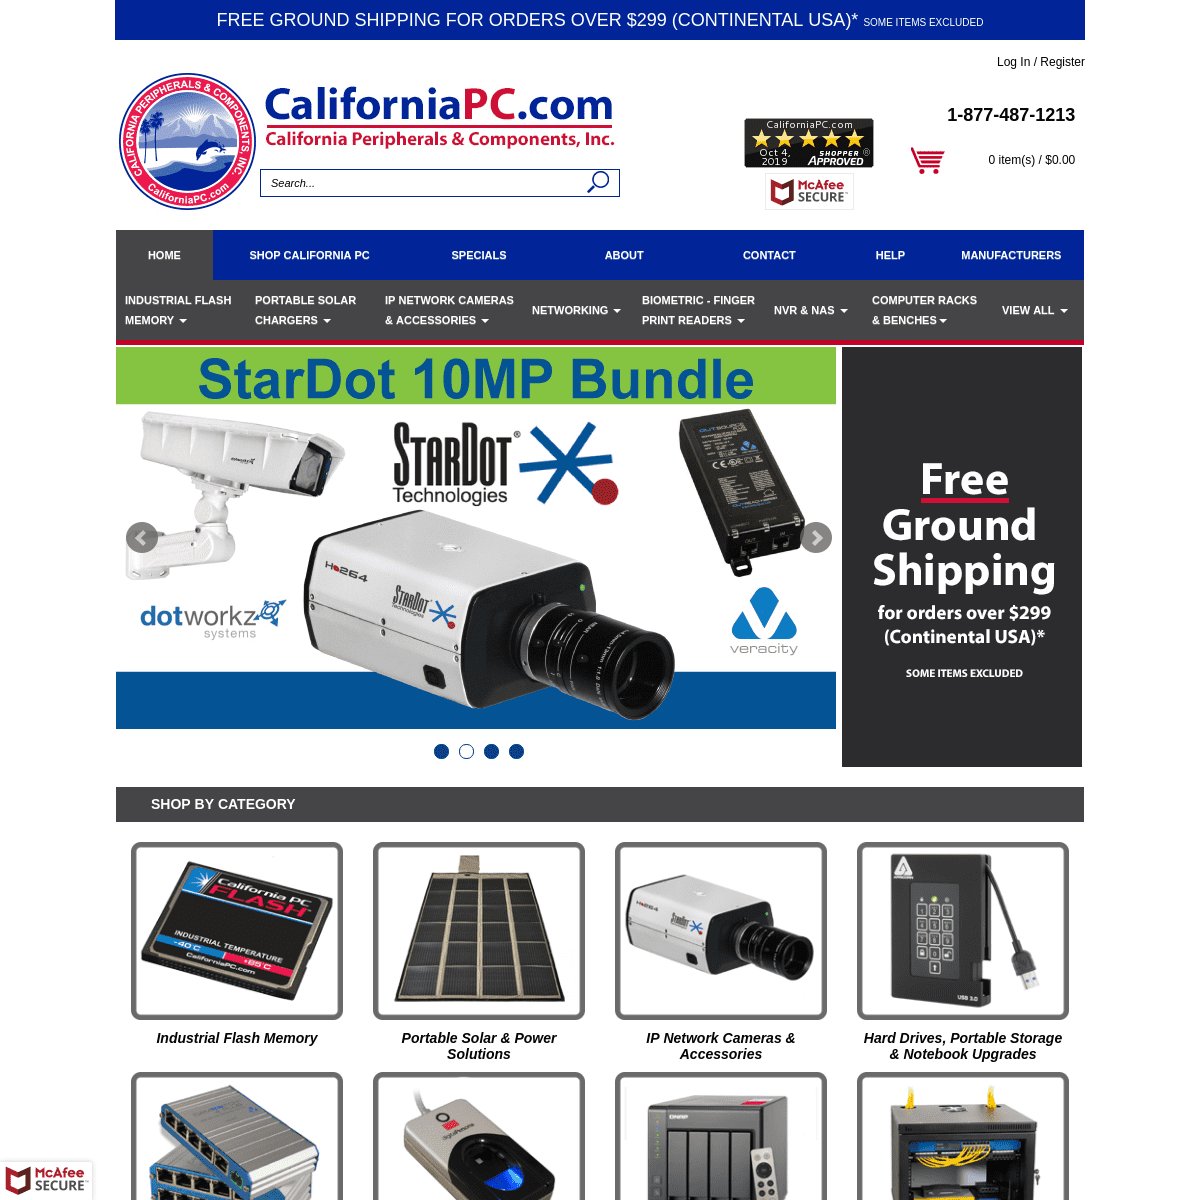 A complete backup of californiapc.com